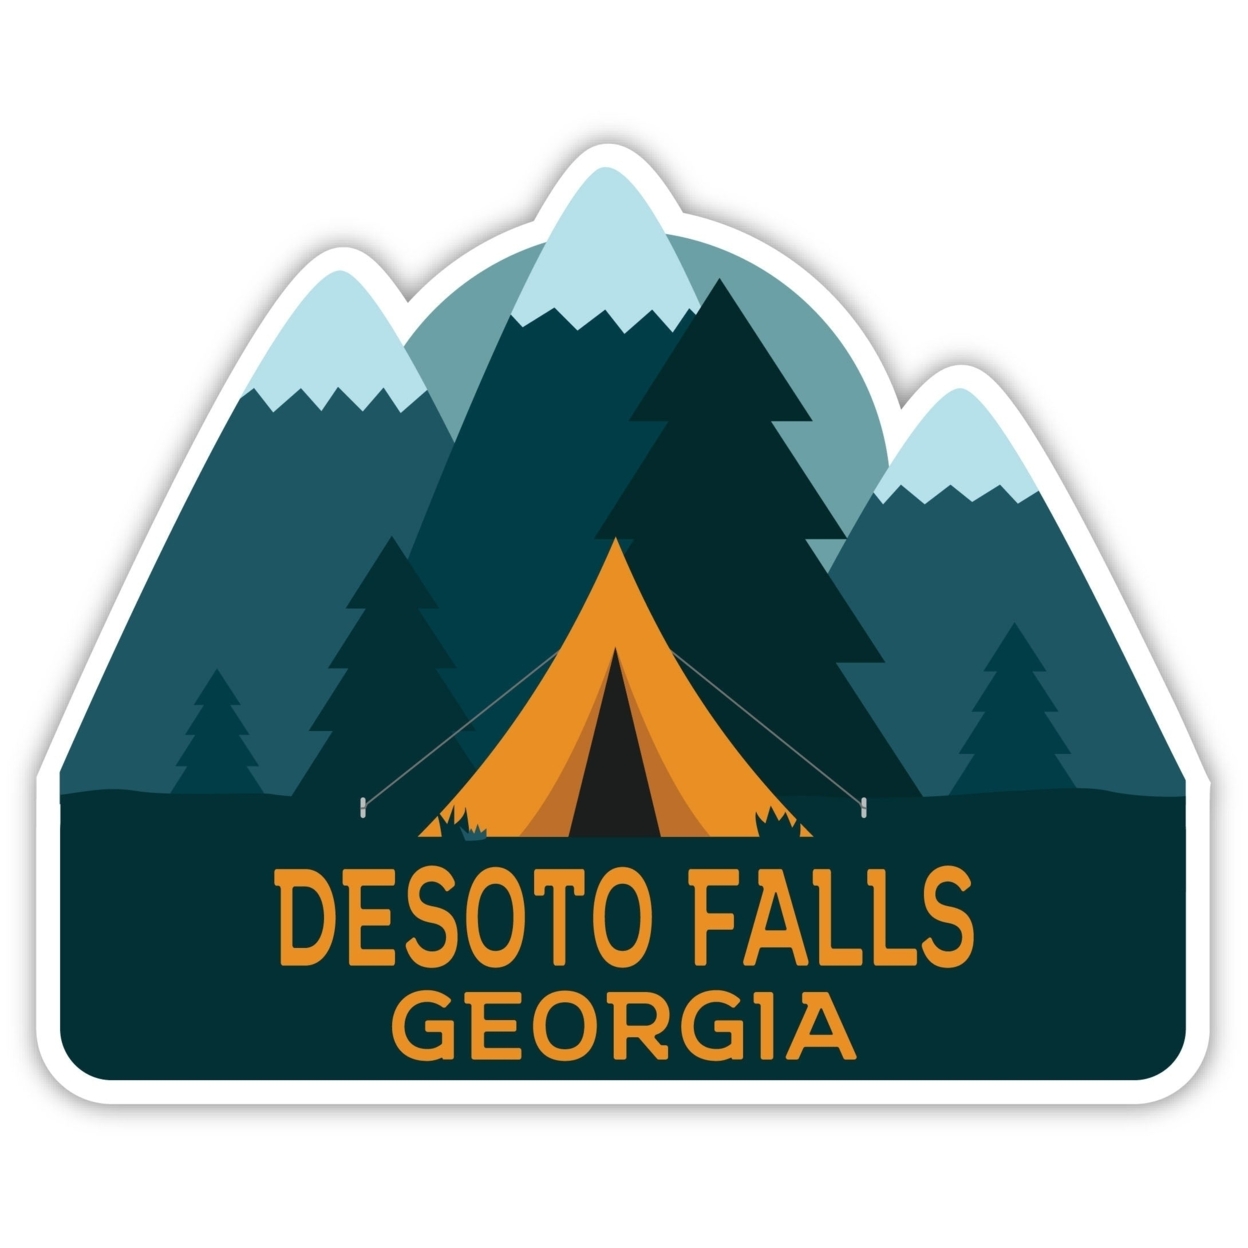 DeSoto Falls Georgia Souvenir Decorative Stickers (Choose Theme And Size) - Single Unit, 12-Inch, Tent